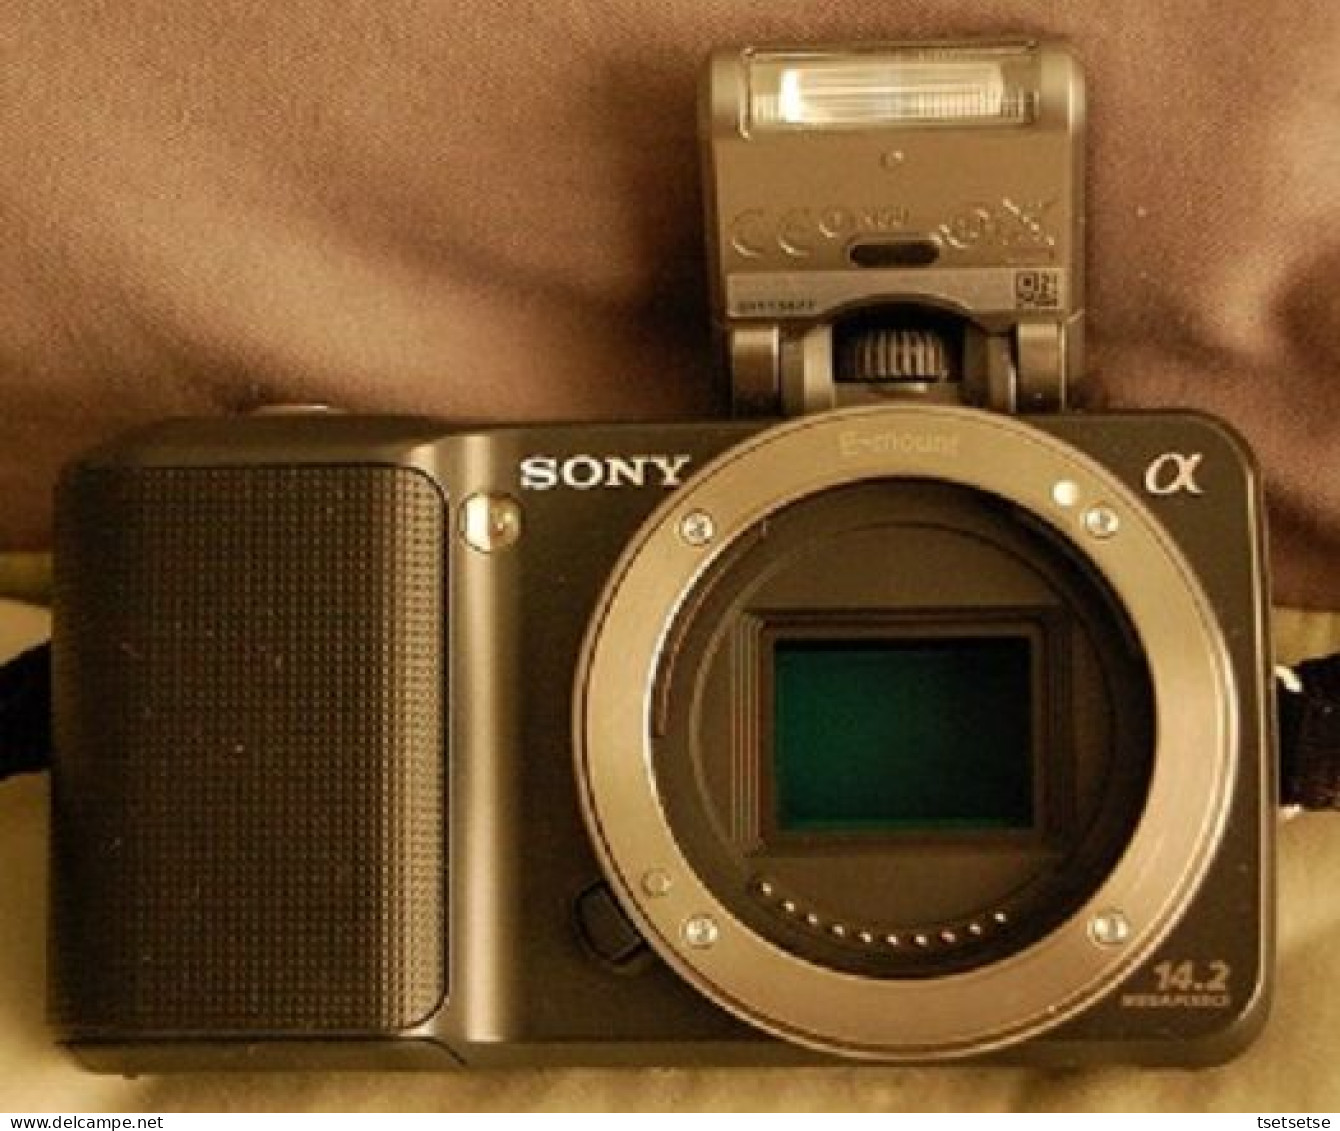 No need spend $2,500+! Sony MIRRORLESS interchange lens video Camera + zoom lens + battery